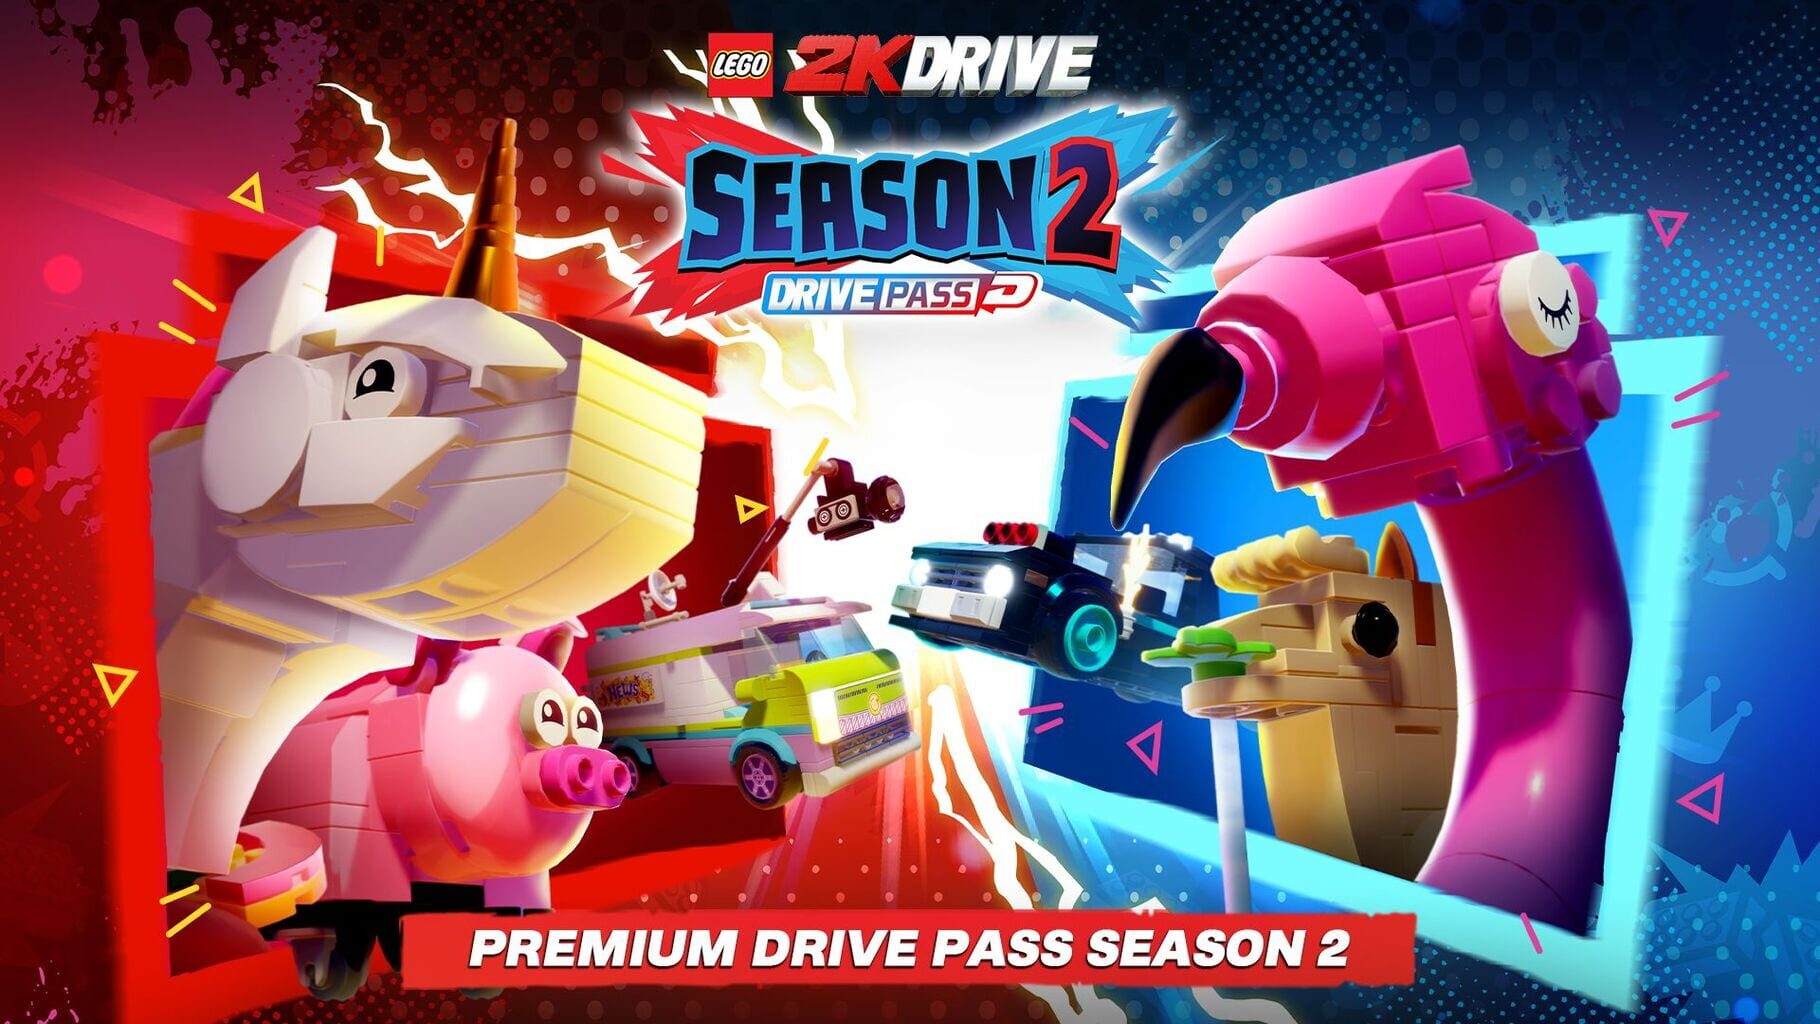 LEGO 2K Drive: Premium Drive Pass Season 2 Image